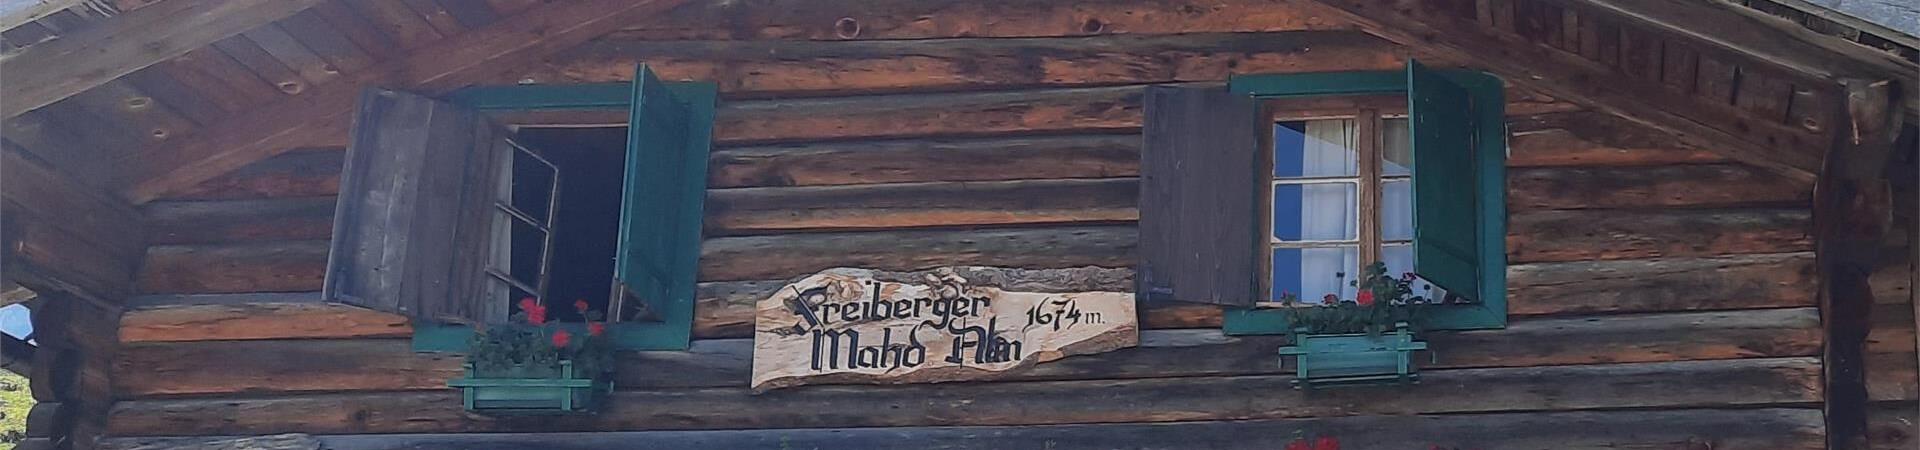 Freiberger Alm